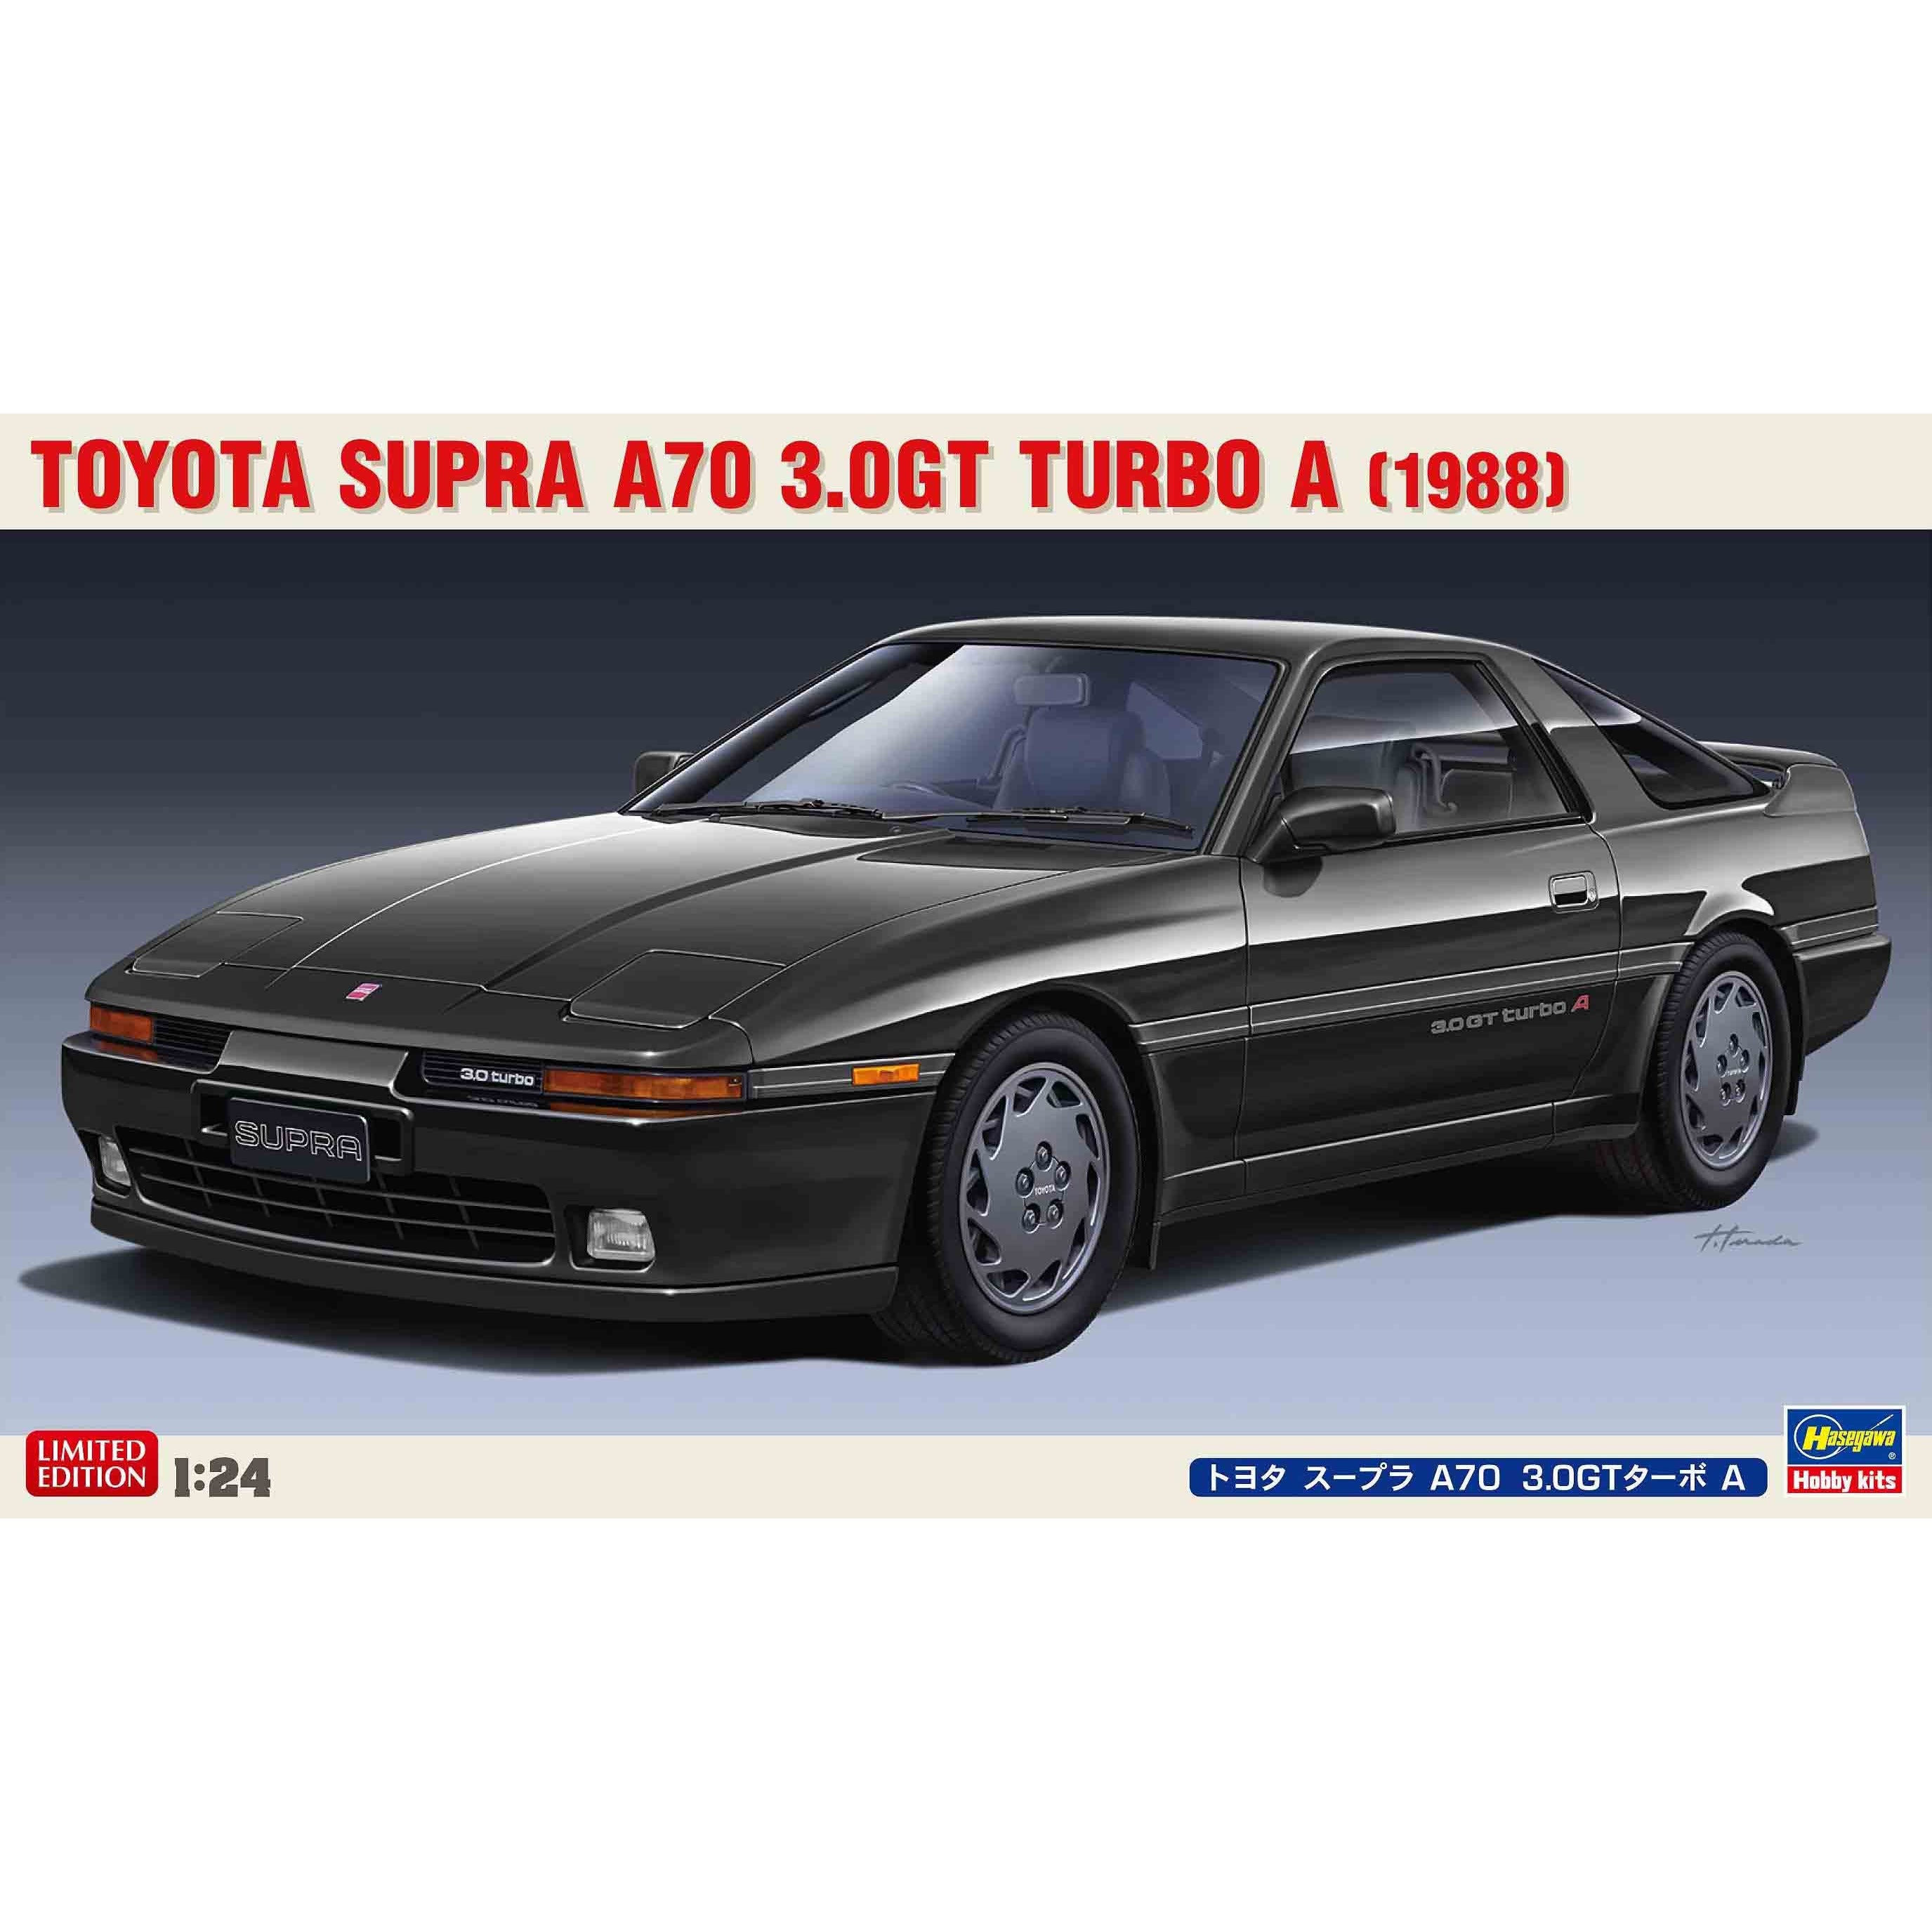 Toyota Supra A70 3.0Gt Turbo A 1/24 #20570 by Hasegawa